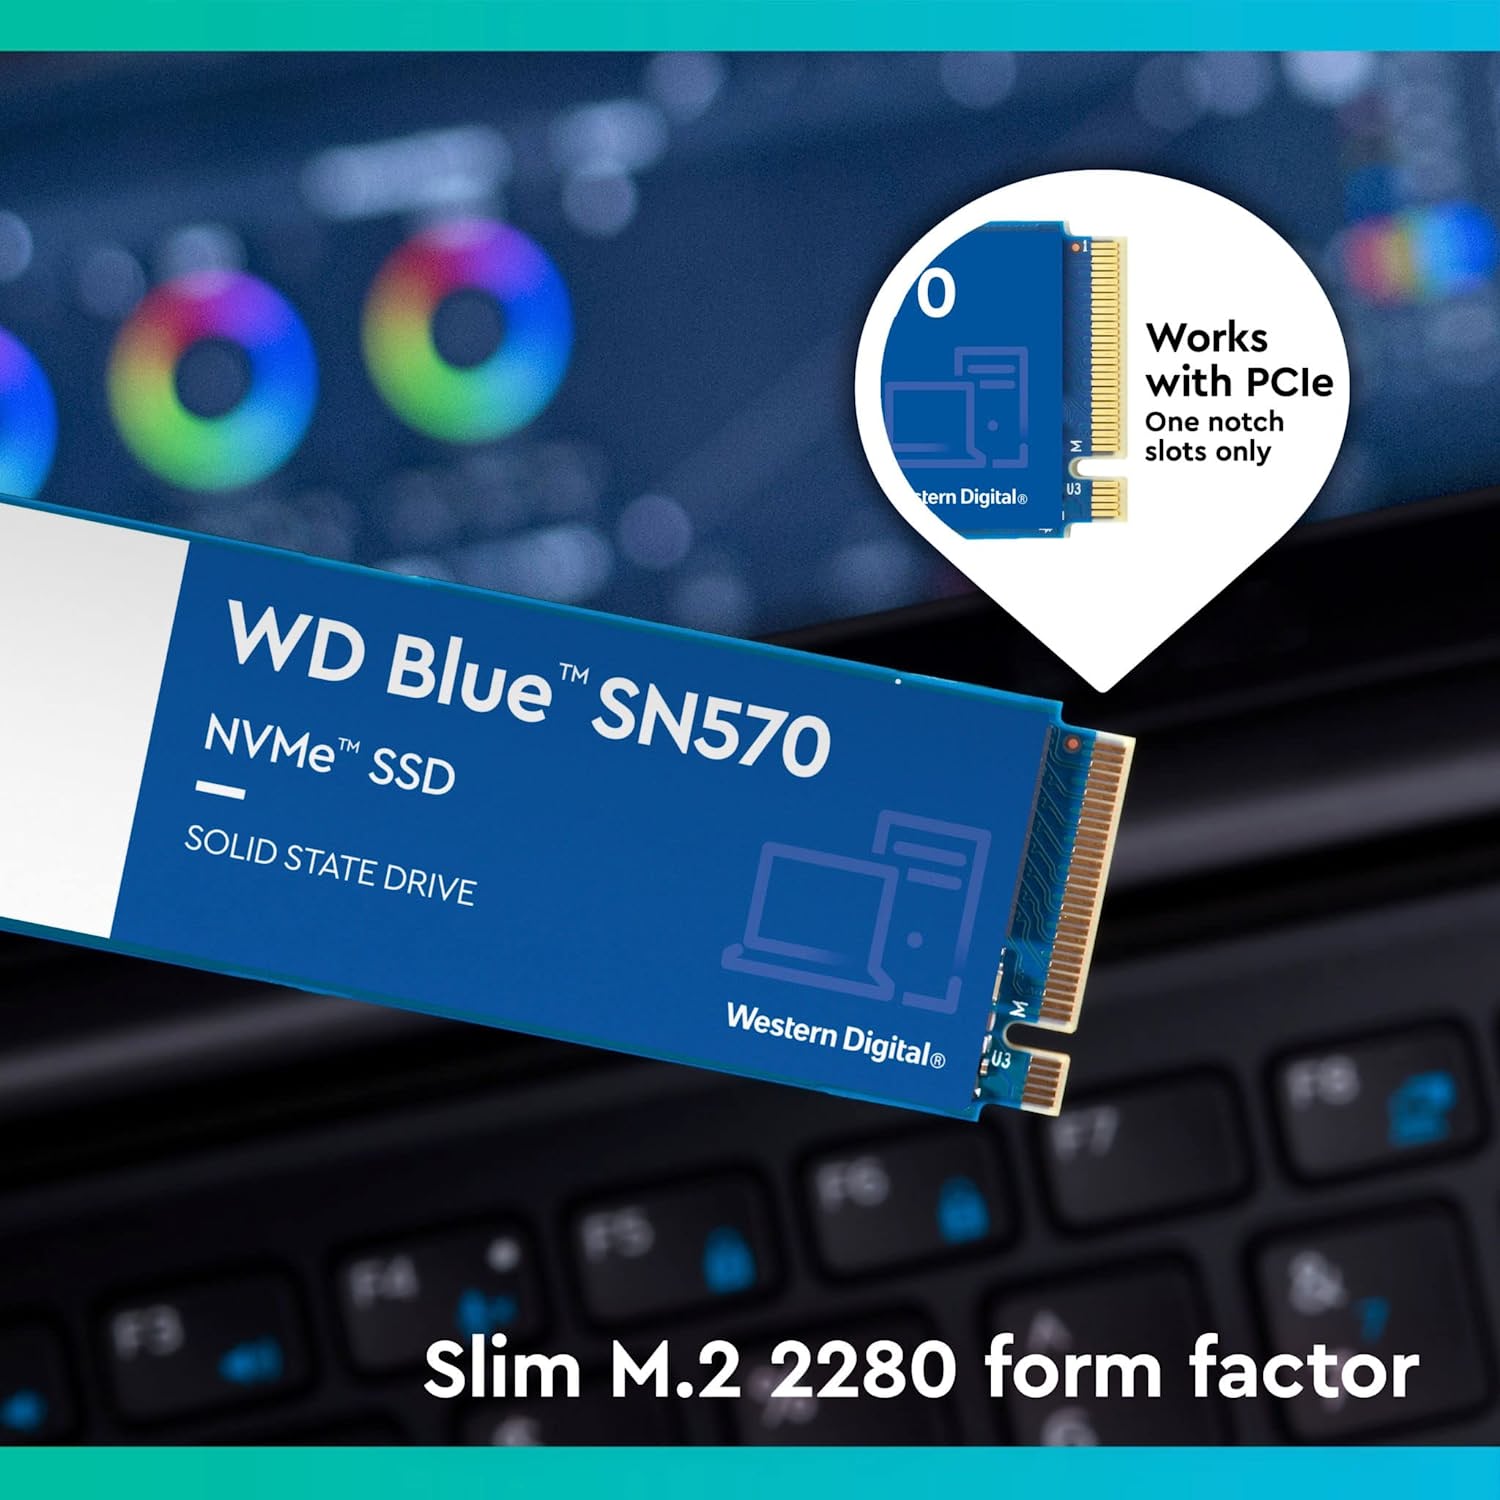 WESTERN DIGITAL BLUE SN570 250GB NVME™ SSD-SOLID STATE DRIVE-Makotek Computers